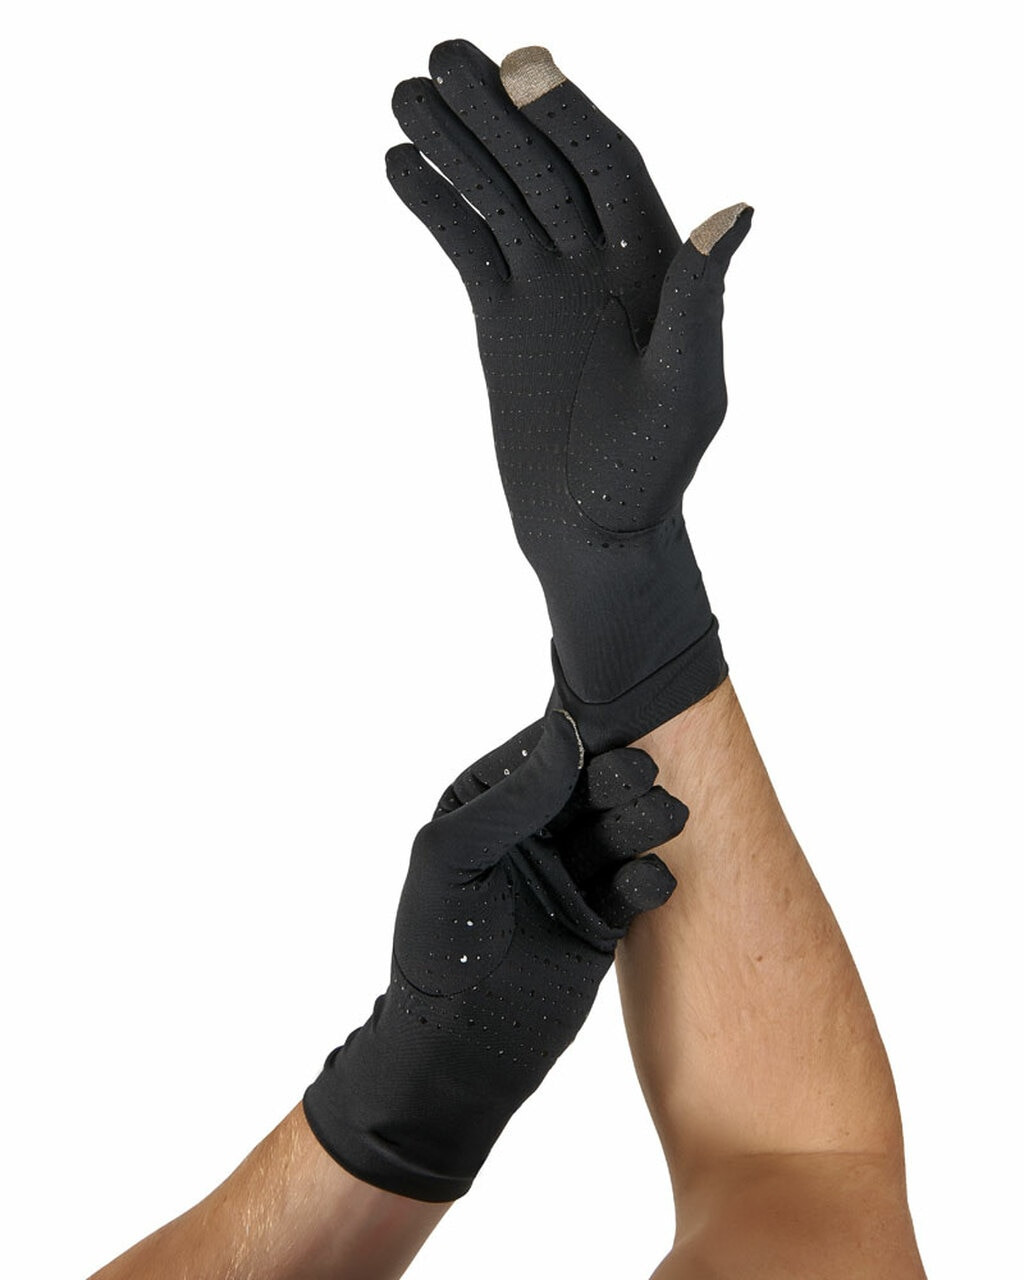 Men's Compression Gloves, Reduce Swelling